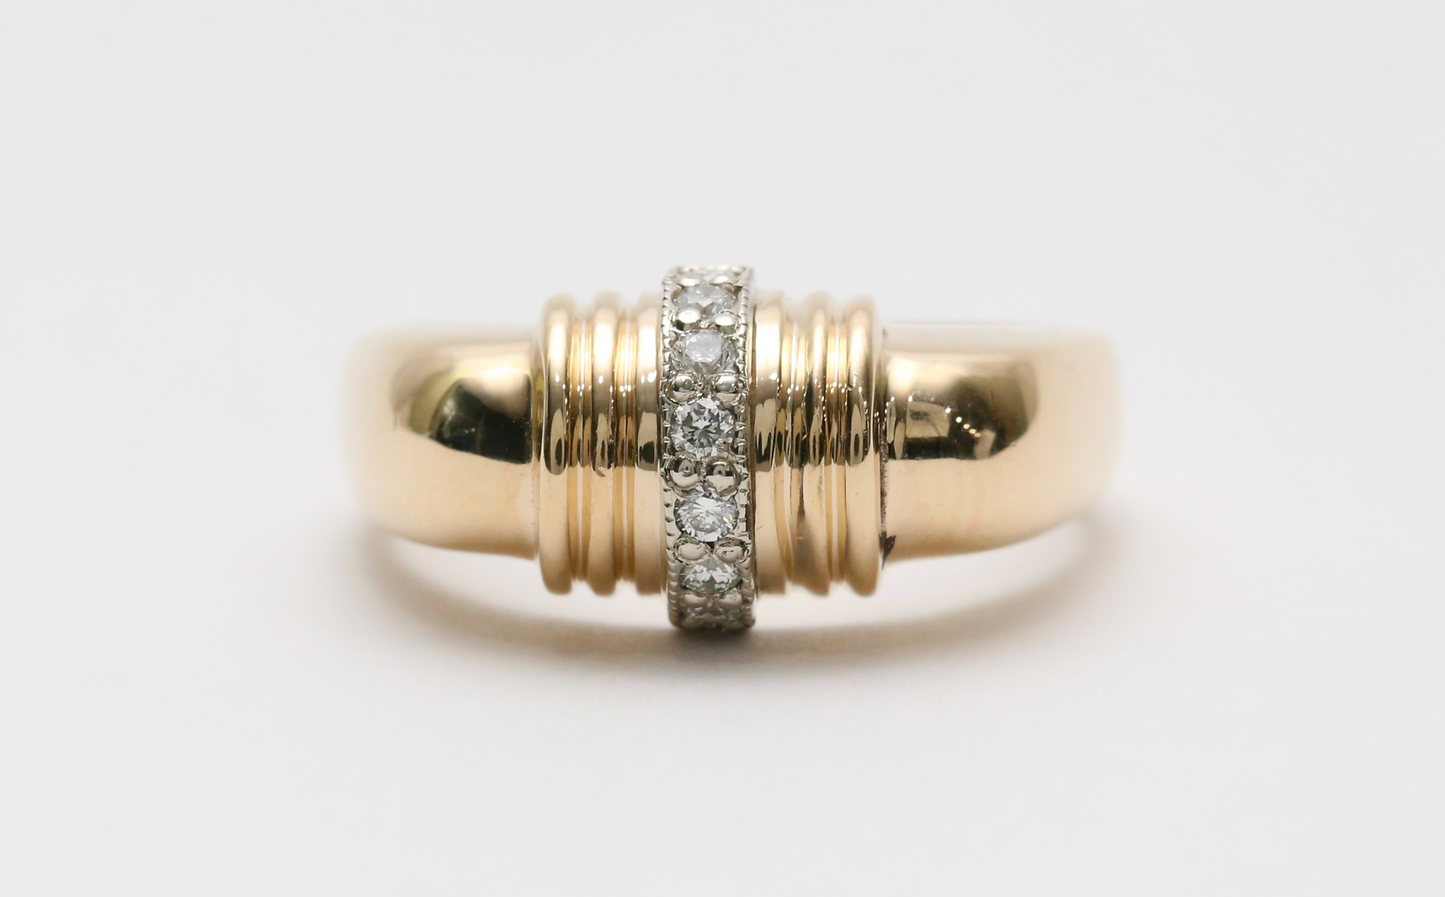 14k Yellow Gold Diamond Ring, Size 7.5 - 7.3g